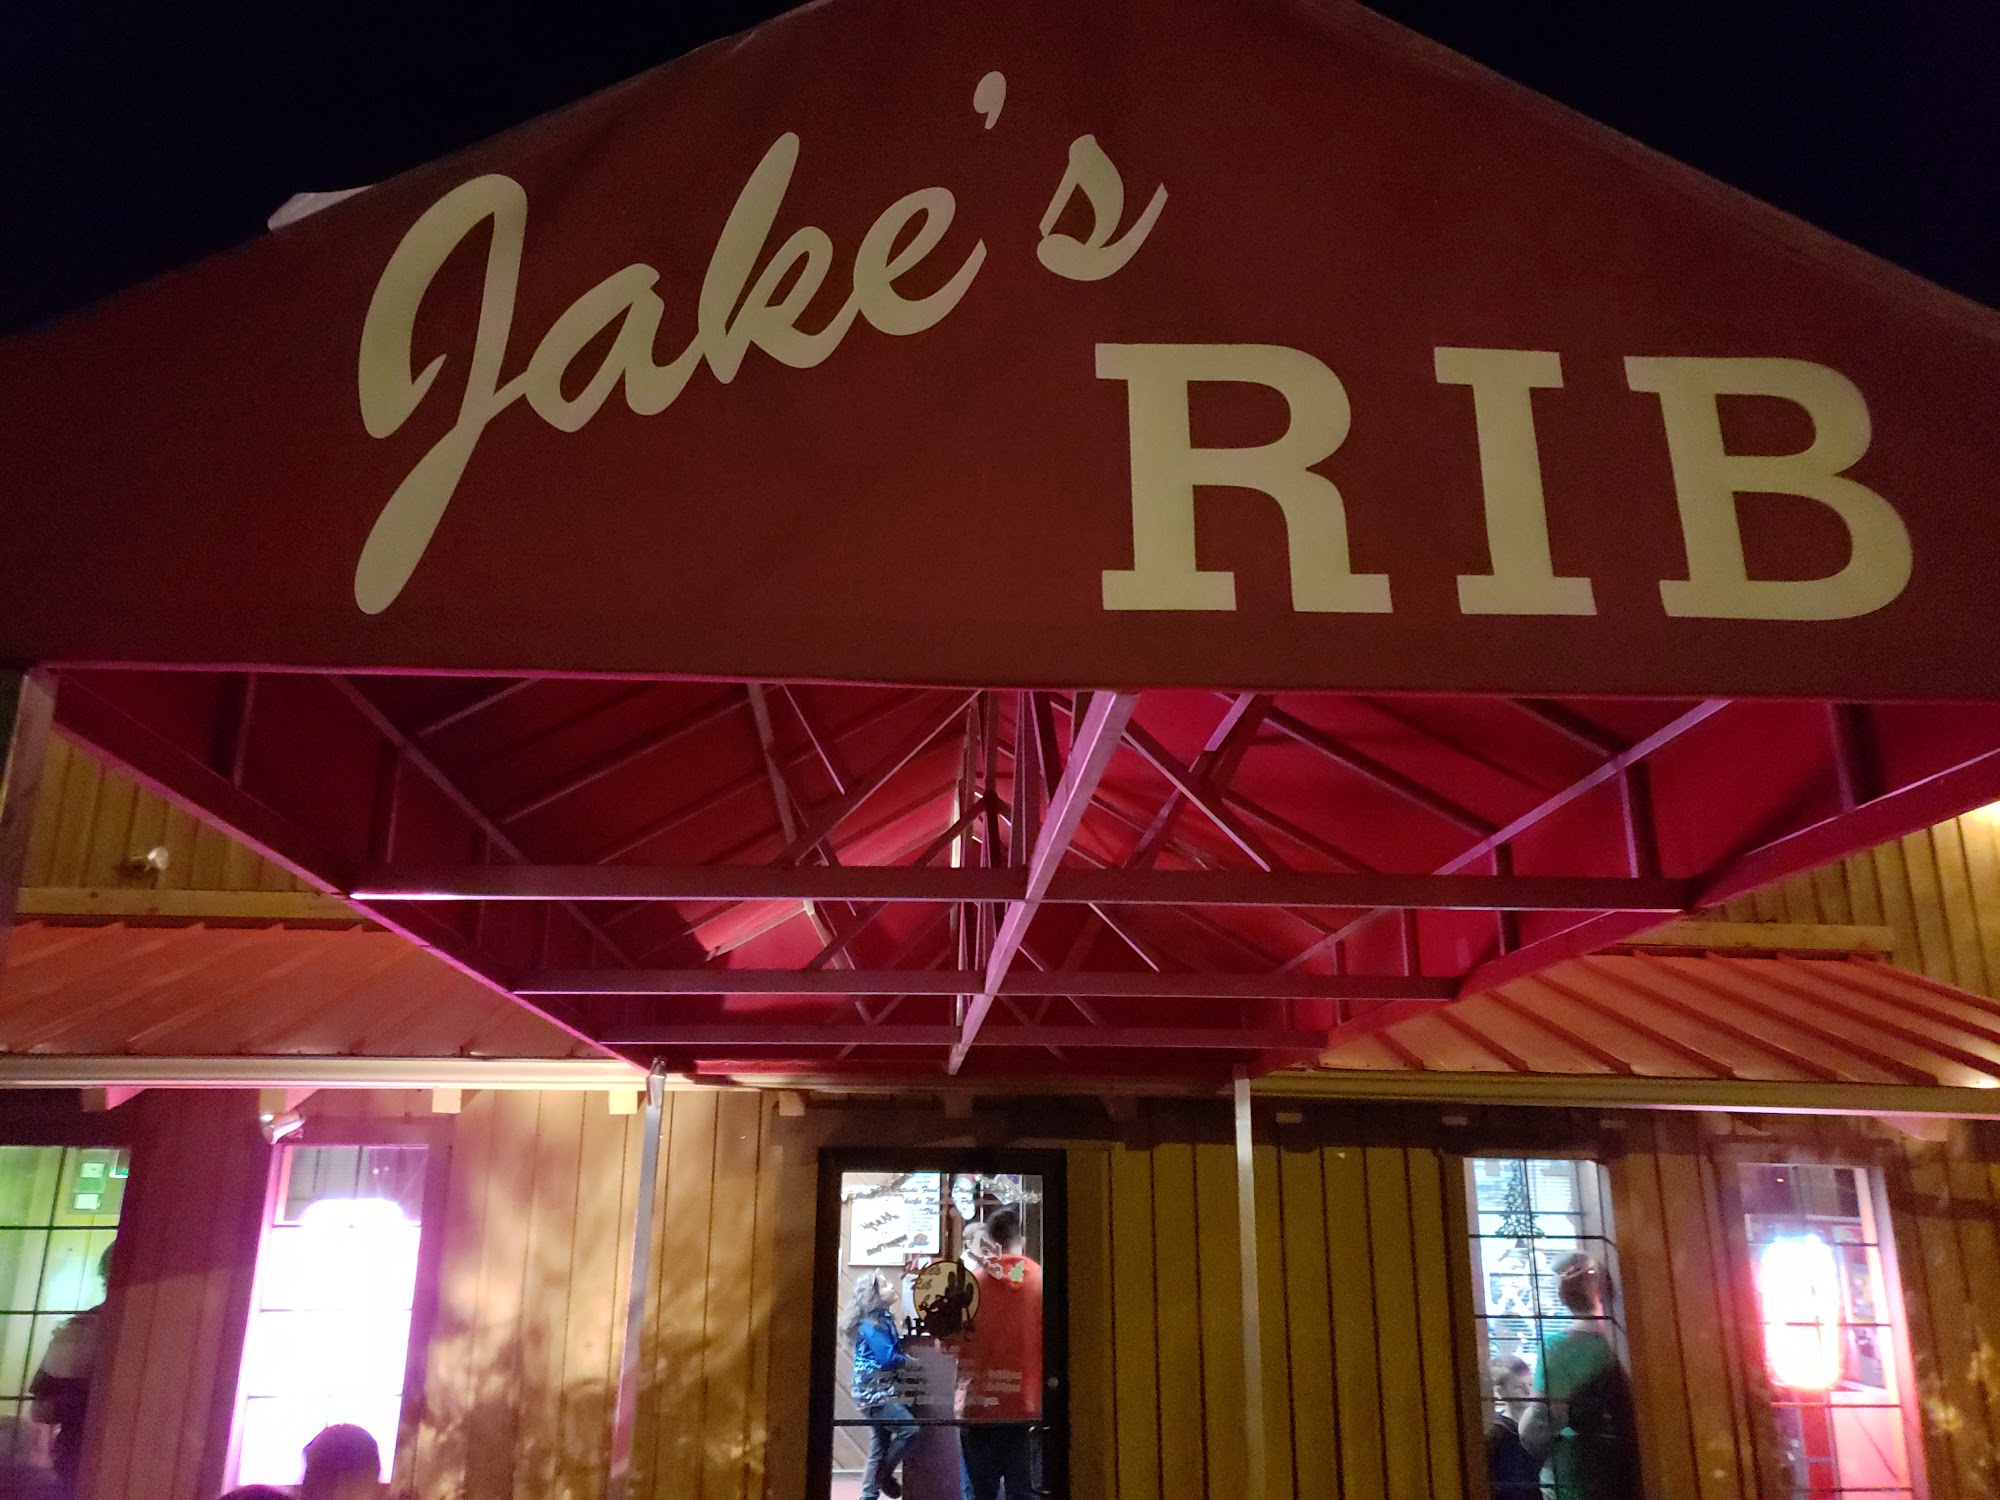 Jake's Rib